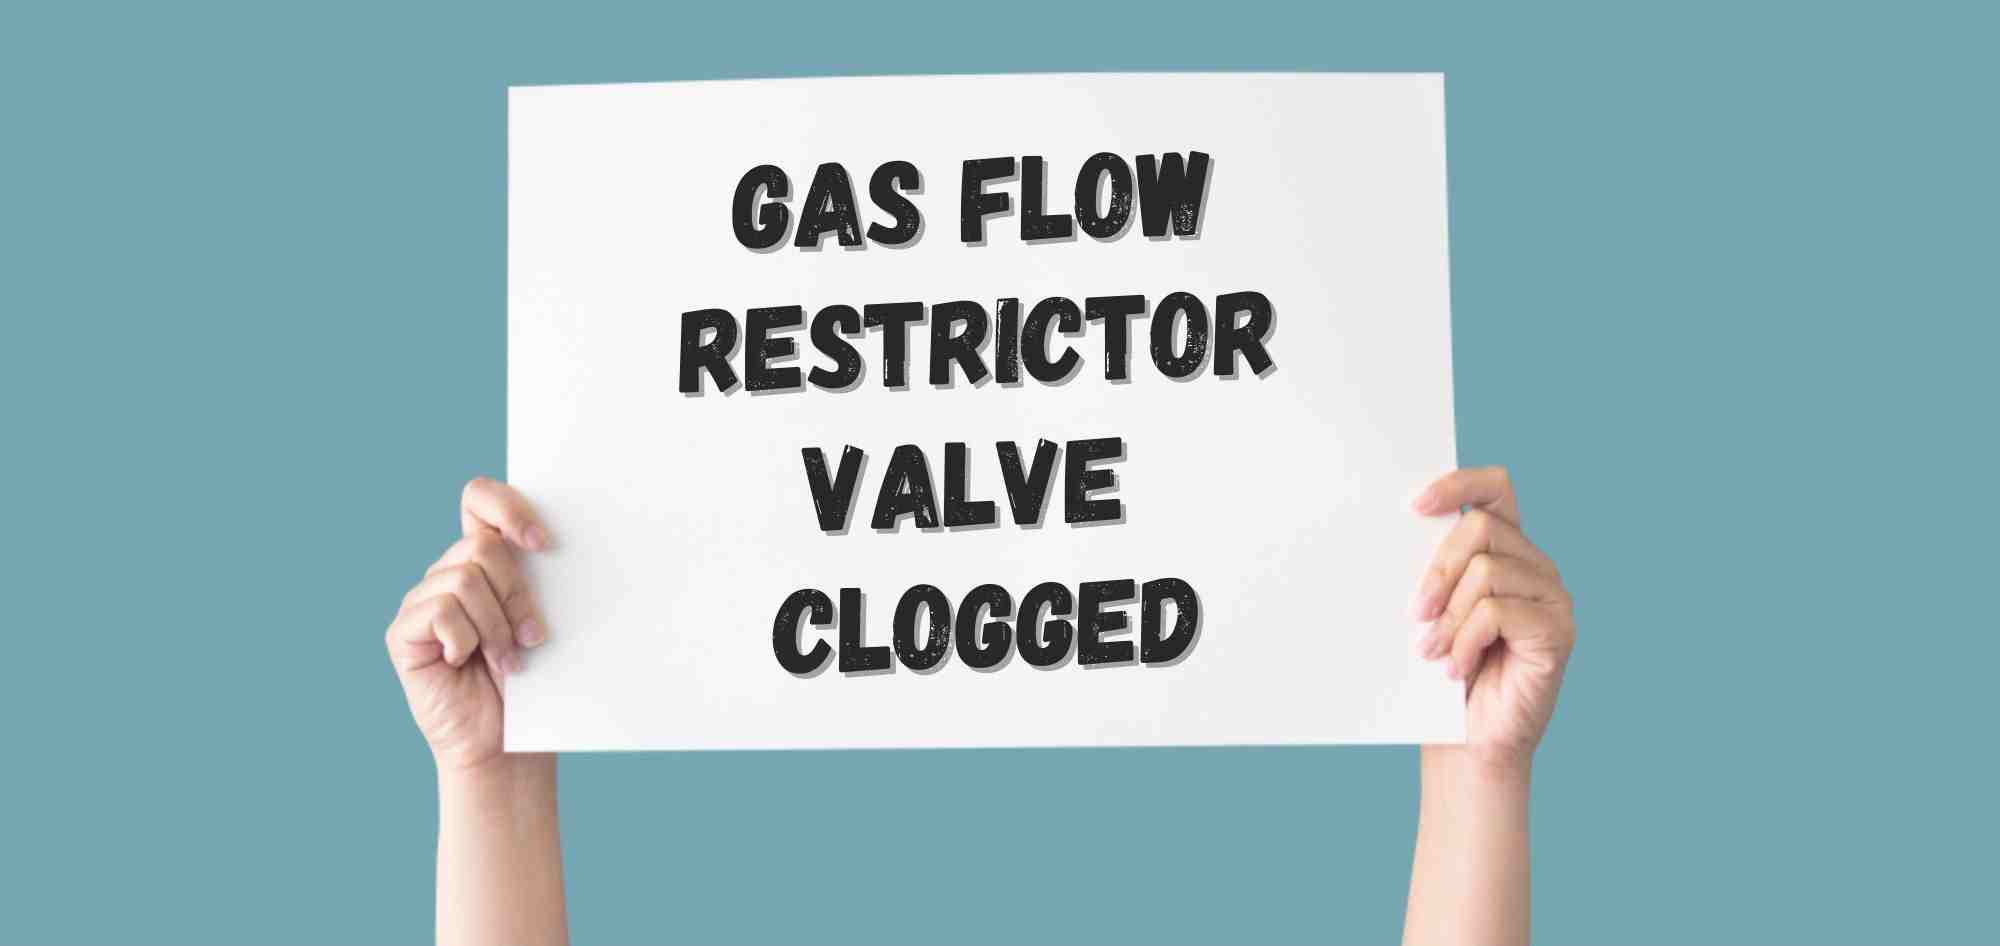 Gas Flow Restrictor Valve Clogged